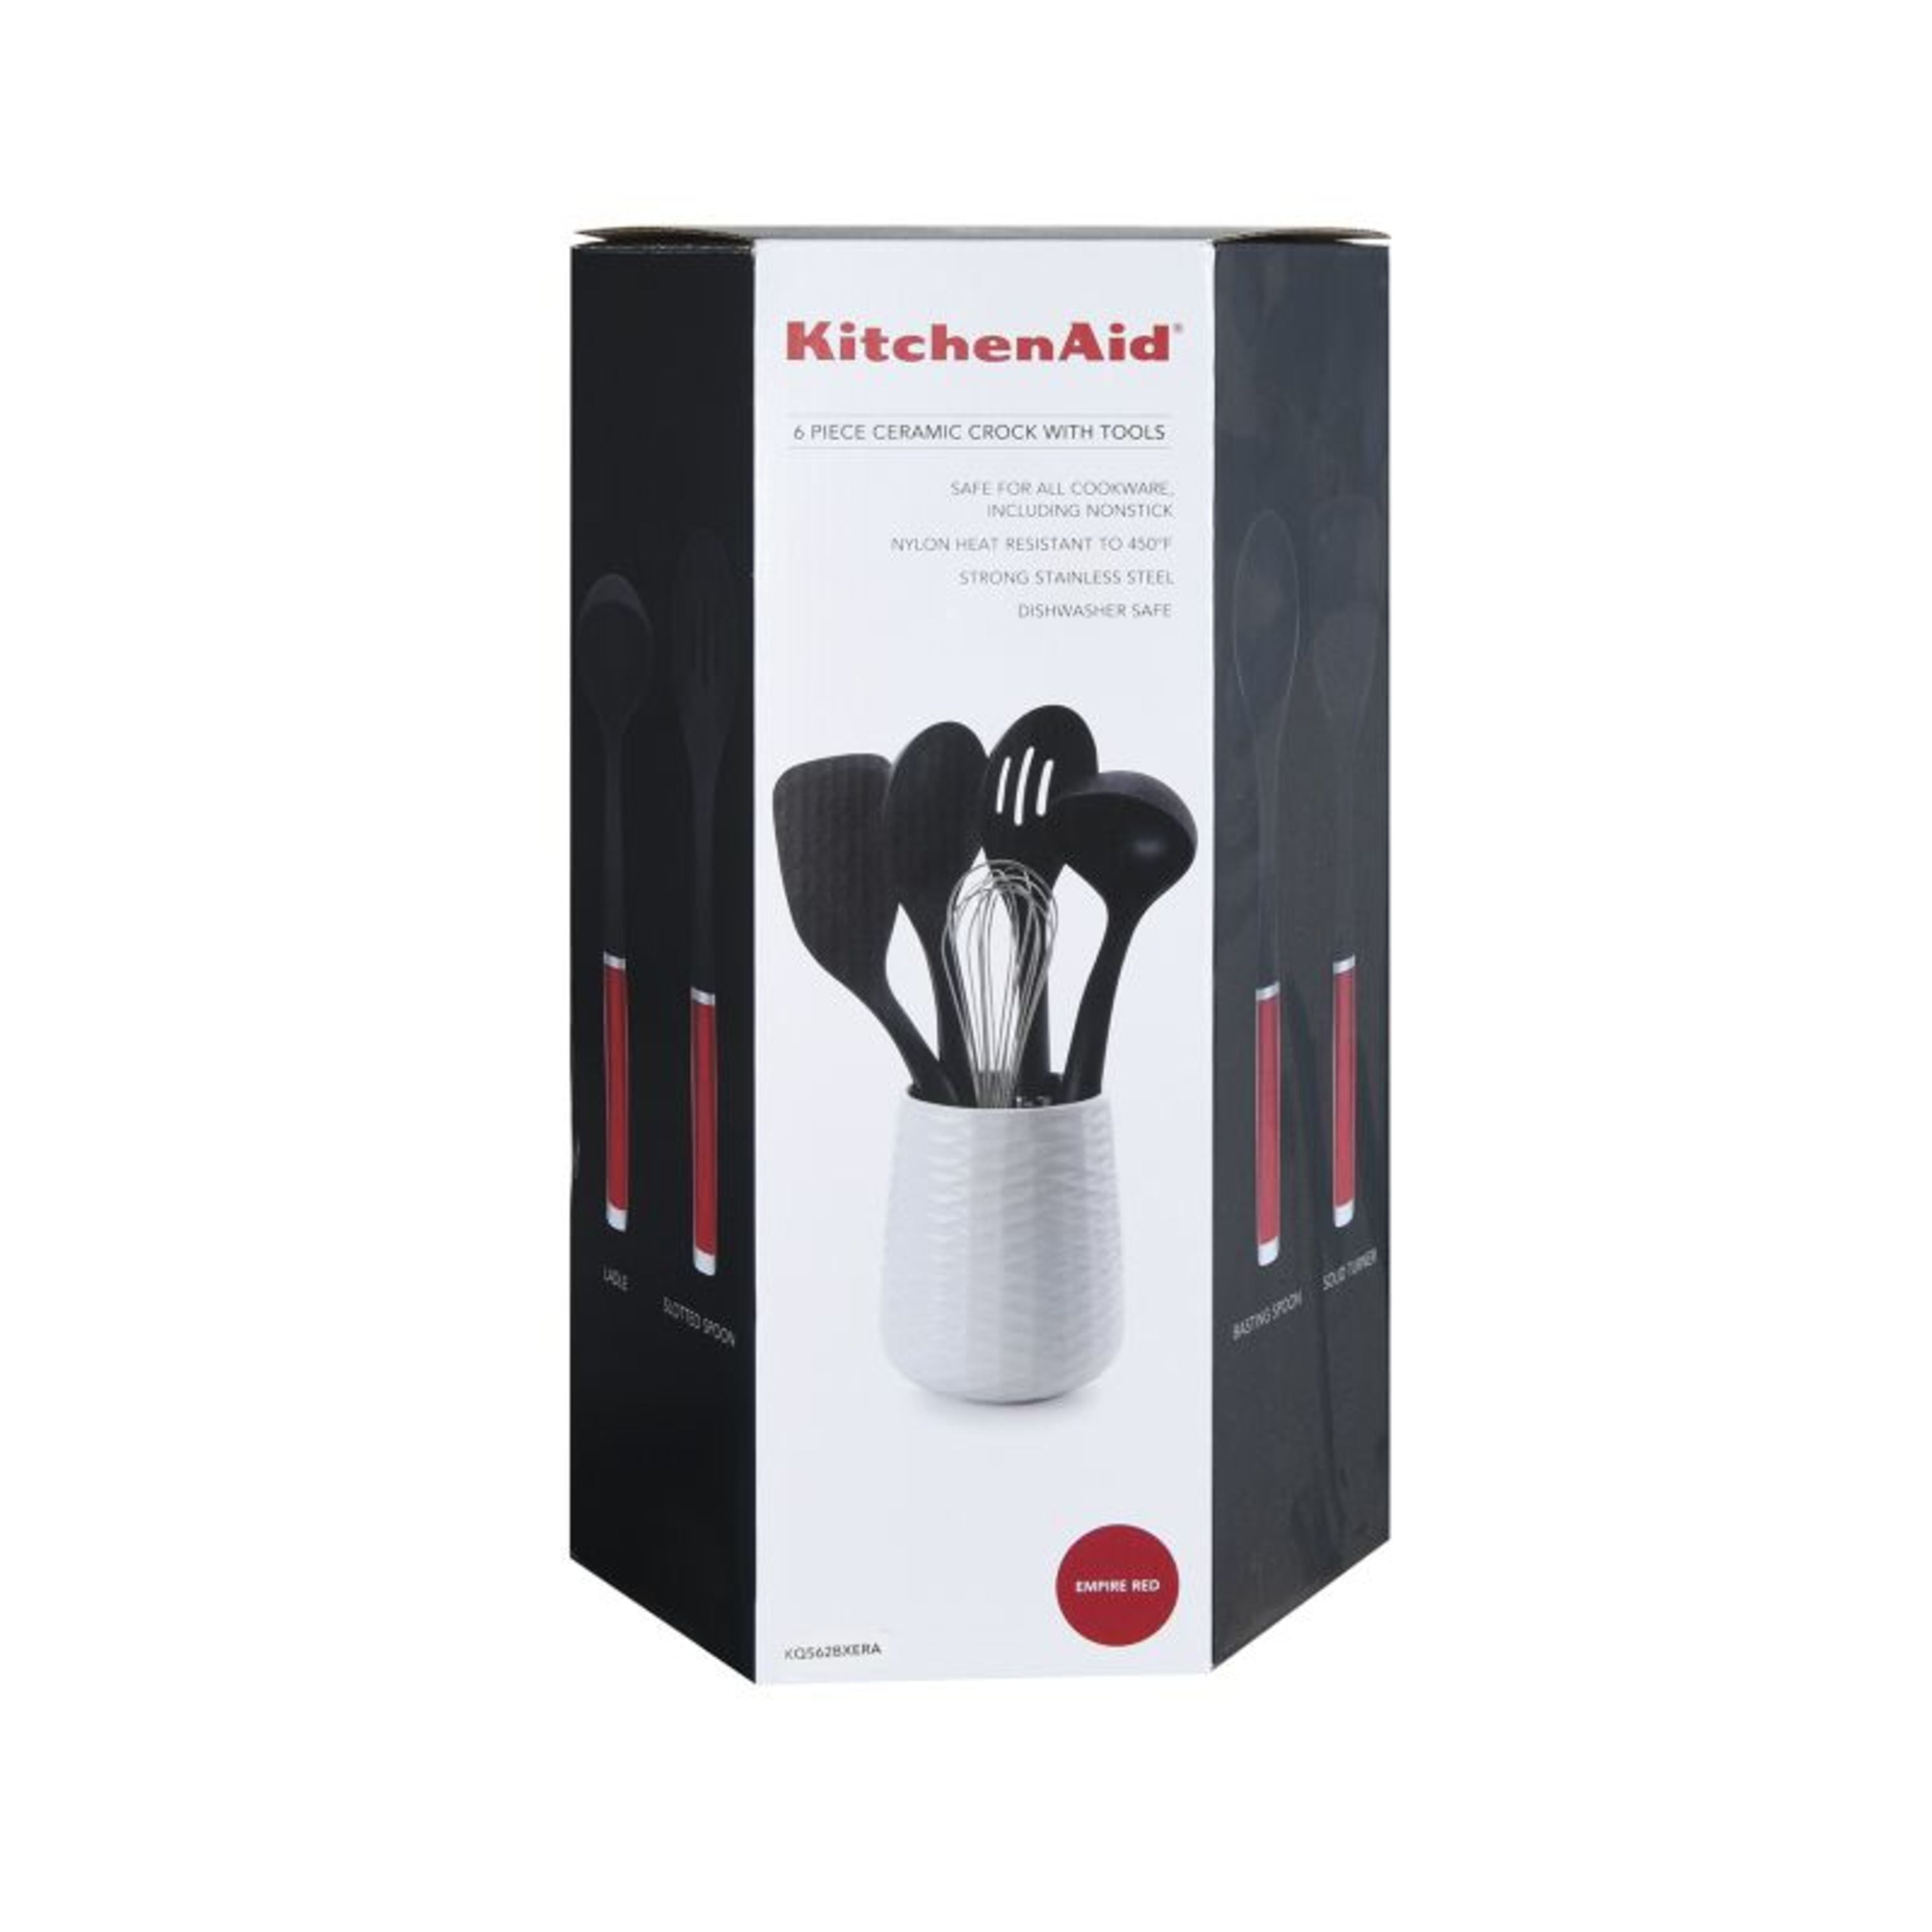  KitchenAid Universal Tool Set, 6 Piece, Black: Home